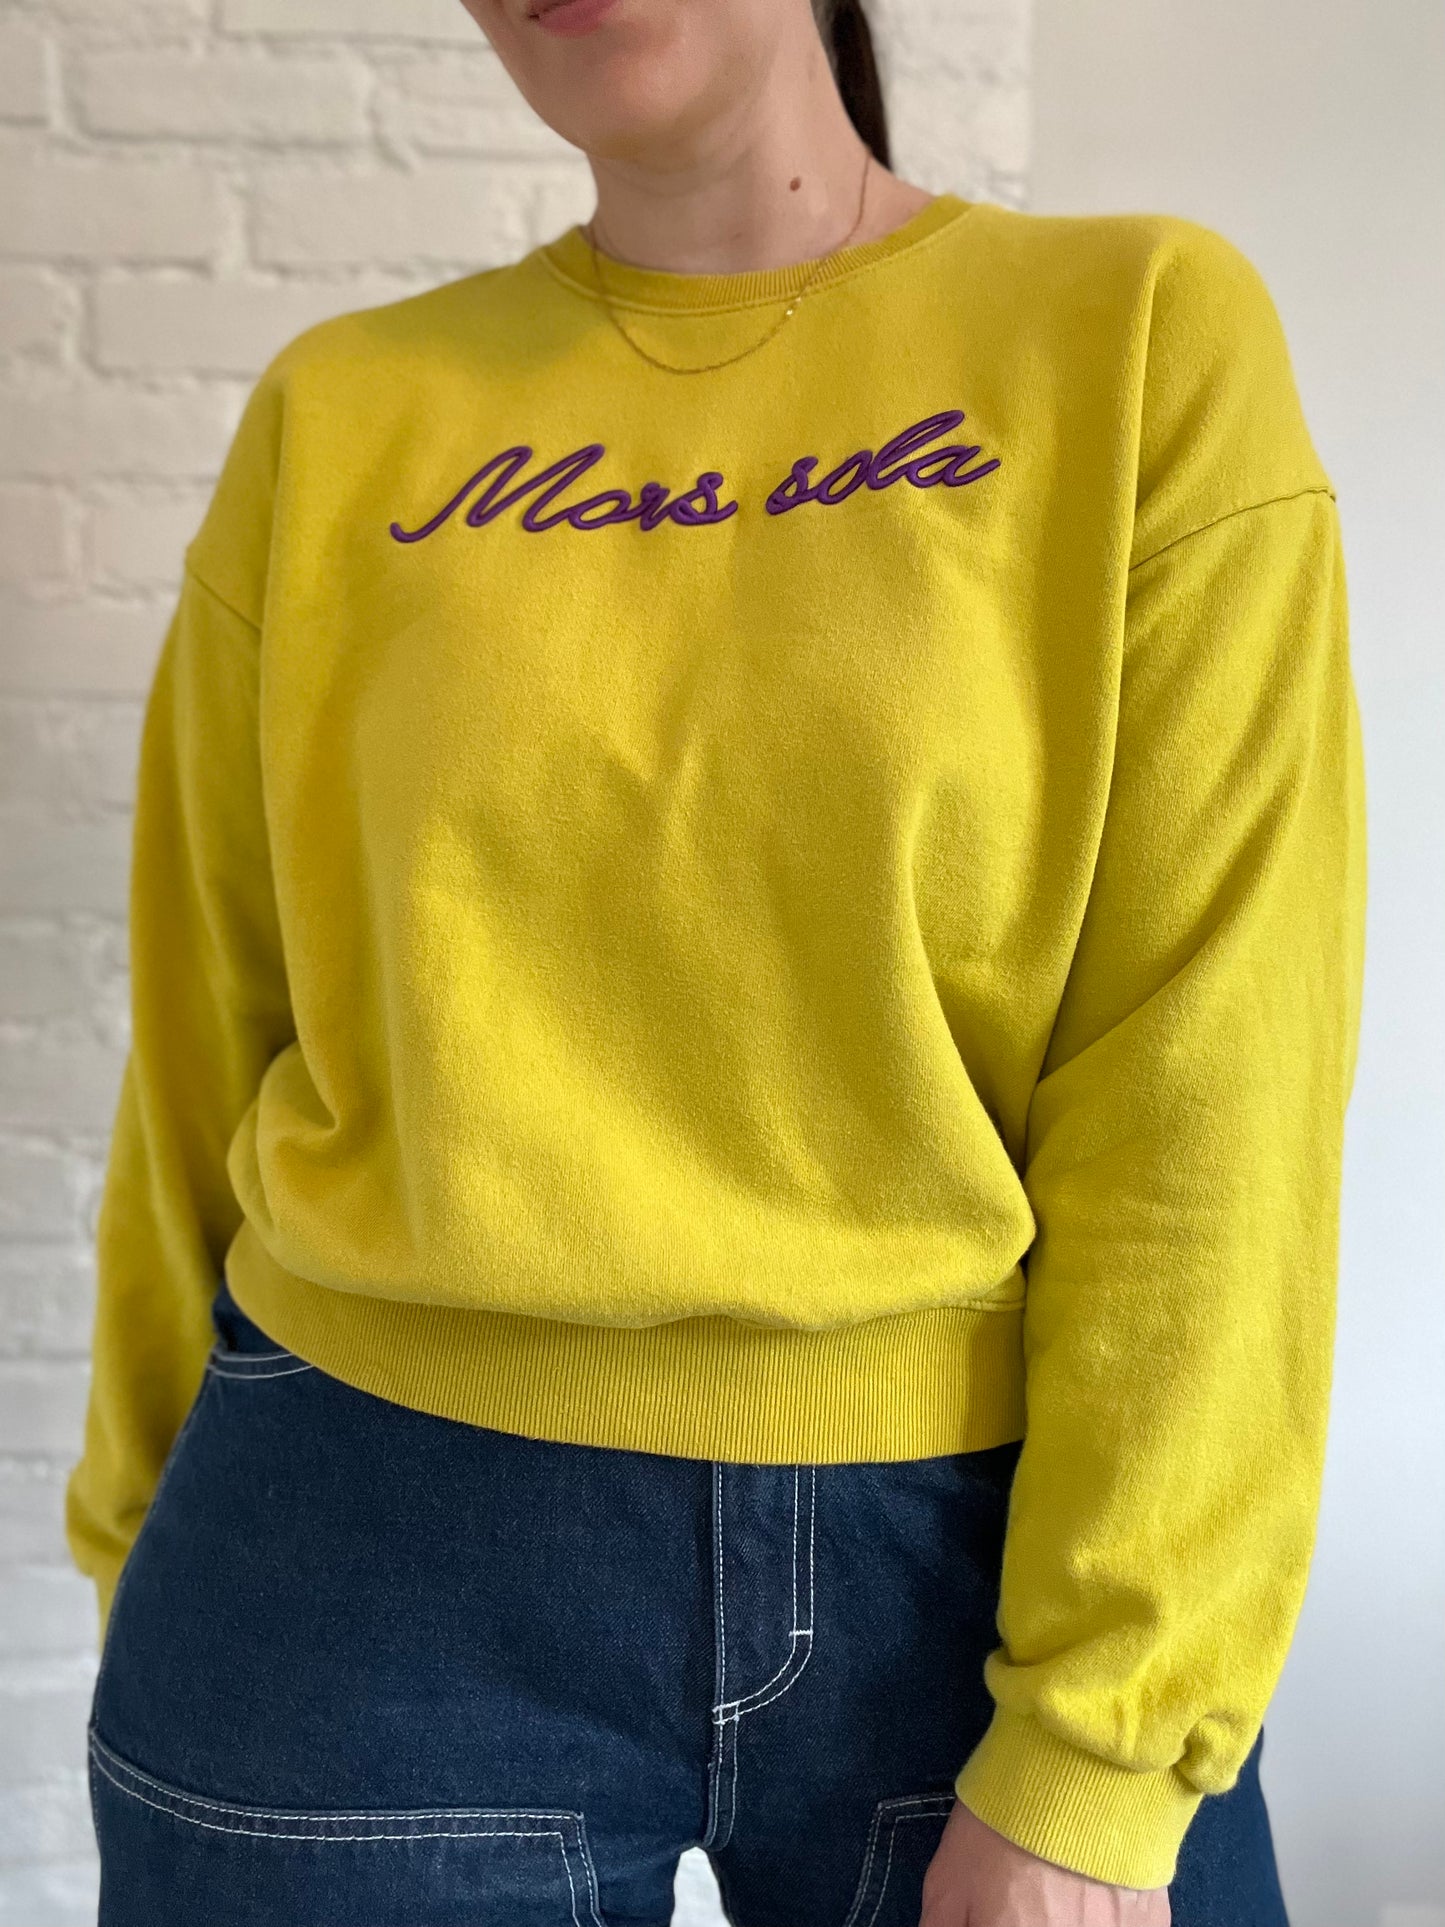 Mars Sola Crewneck Sweater - Size S